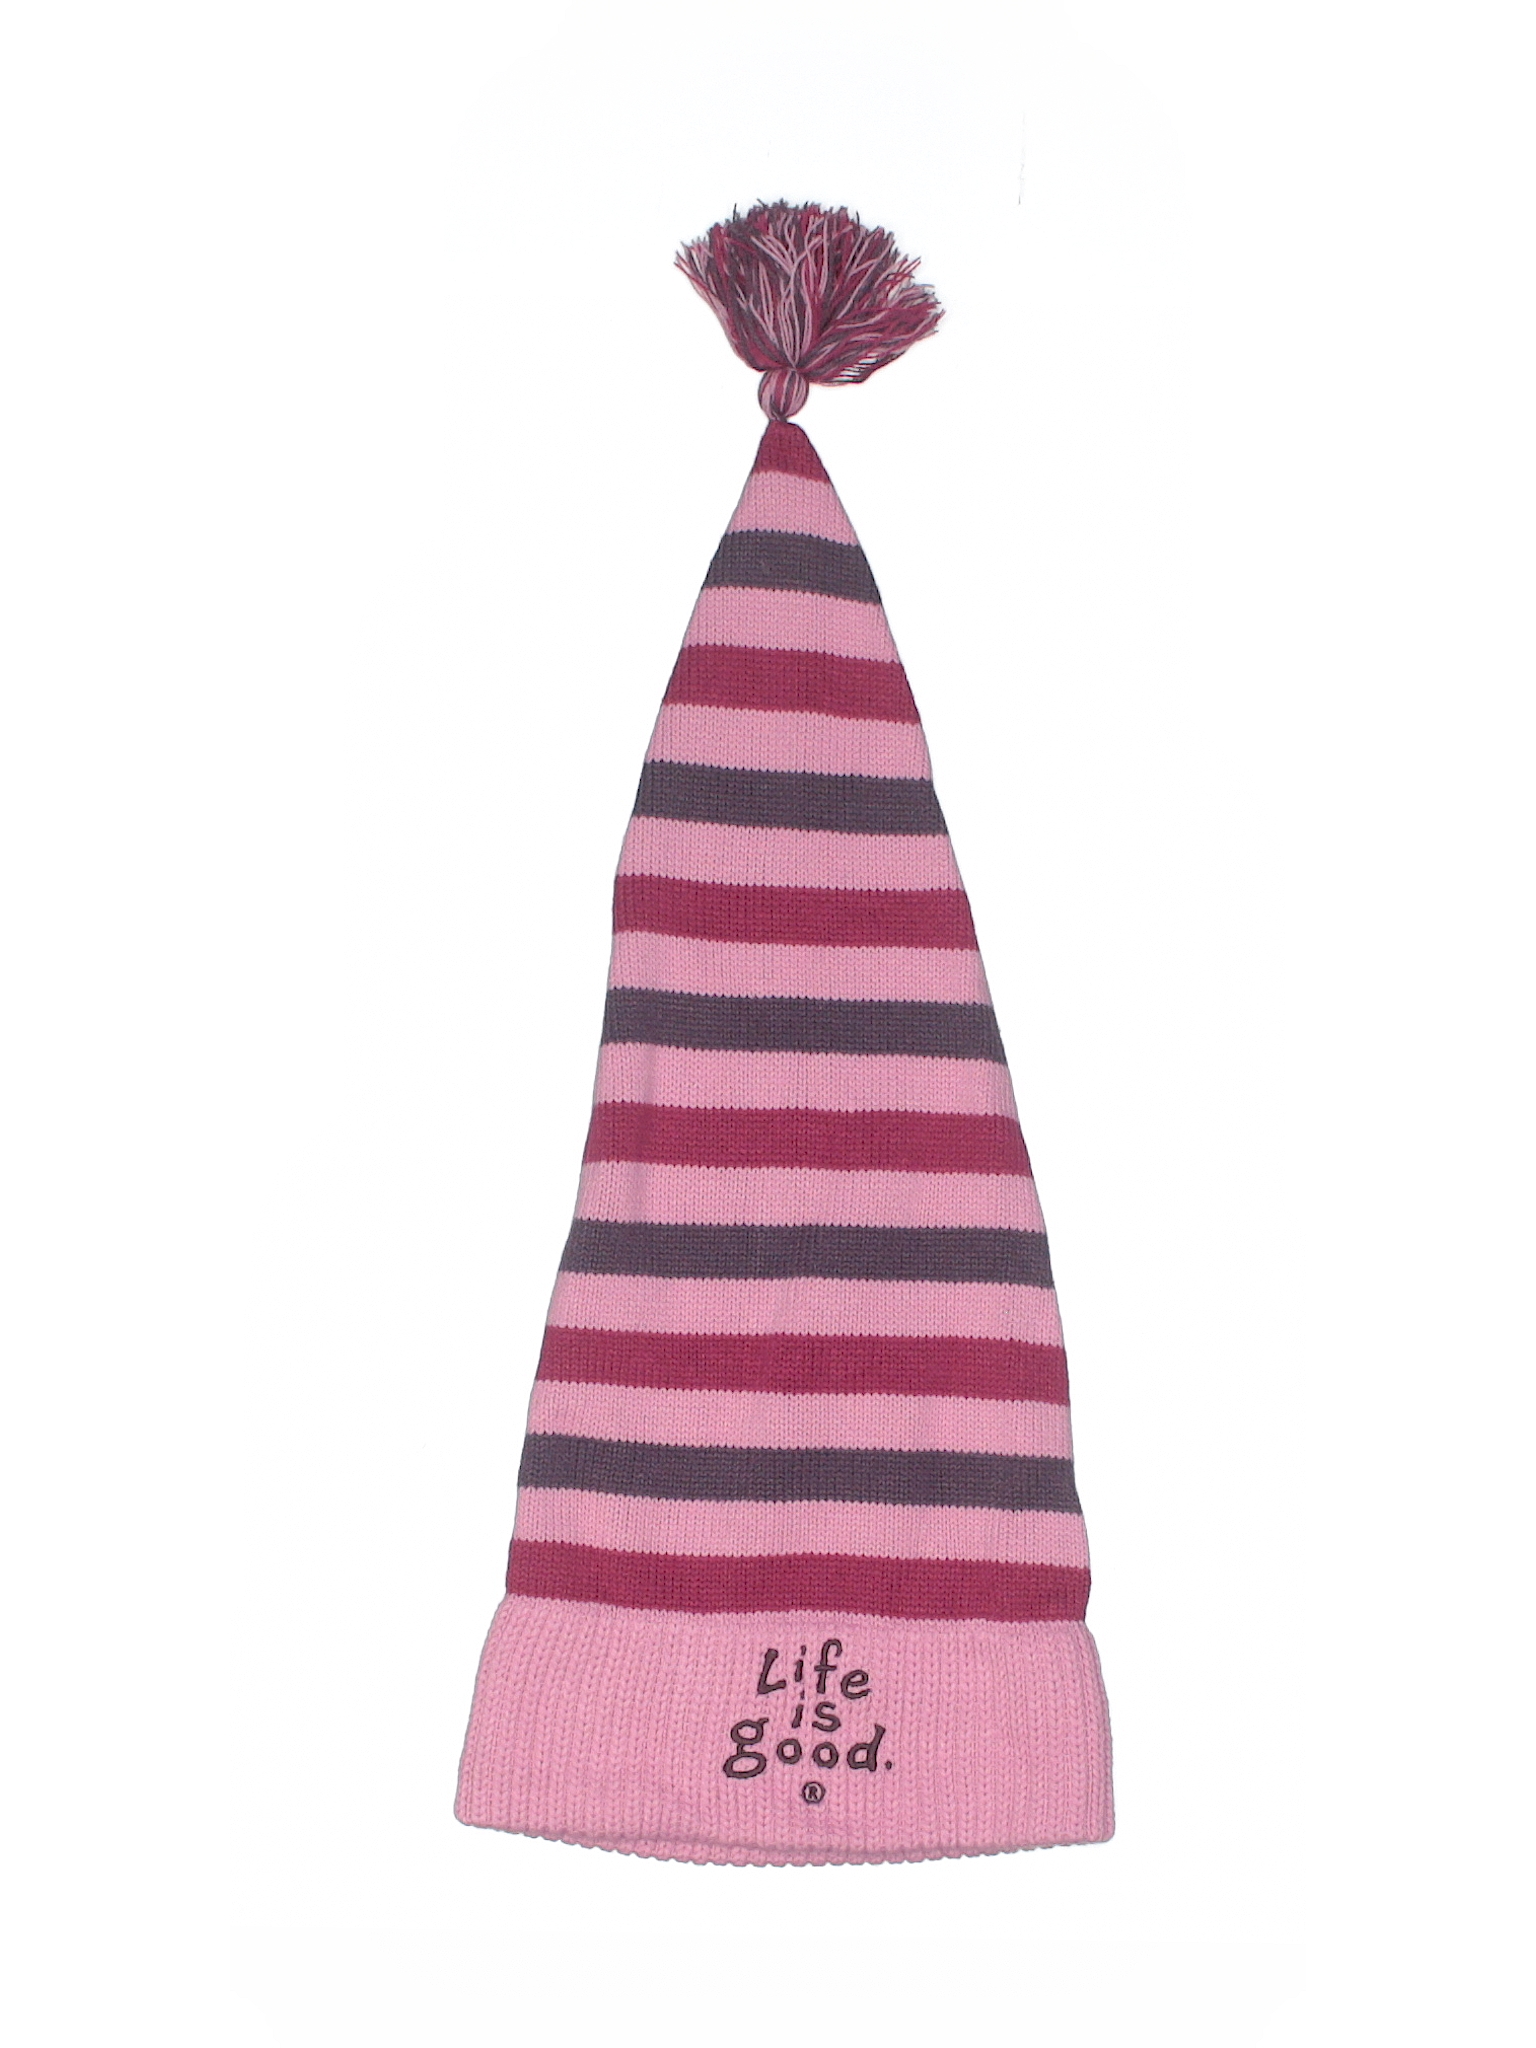 Bliv forvirret Ungdom ikke Life Is Good 100% Acrylic Stripes Pink Beanie Size Med - Lg - 66% off |  thredUP